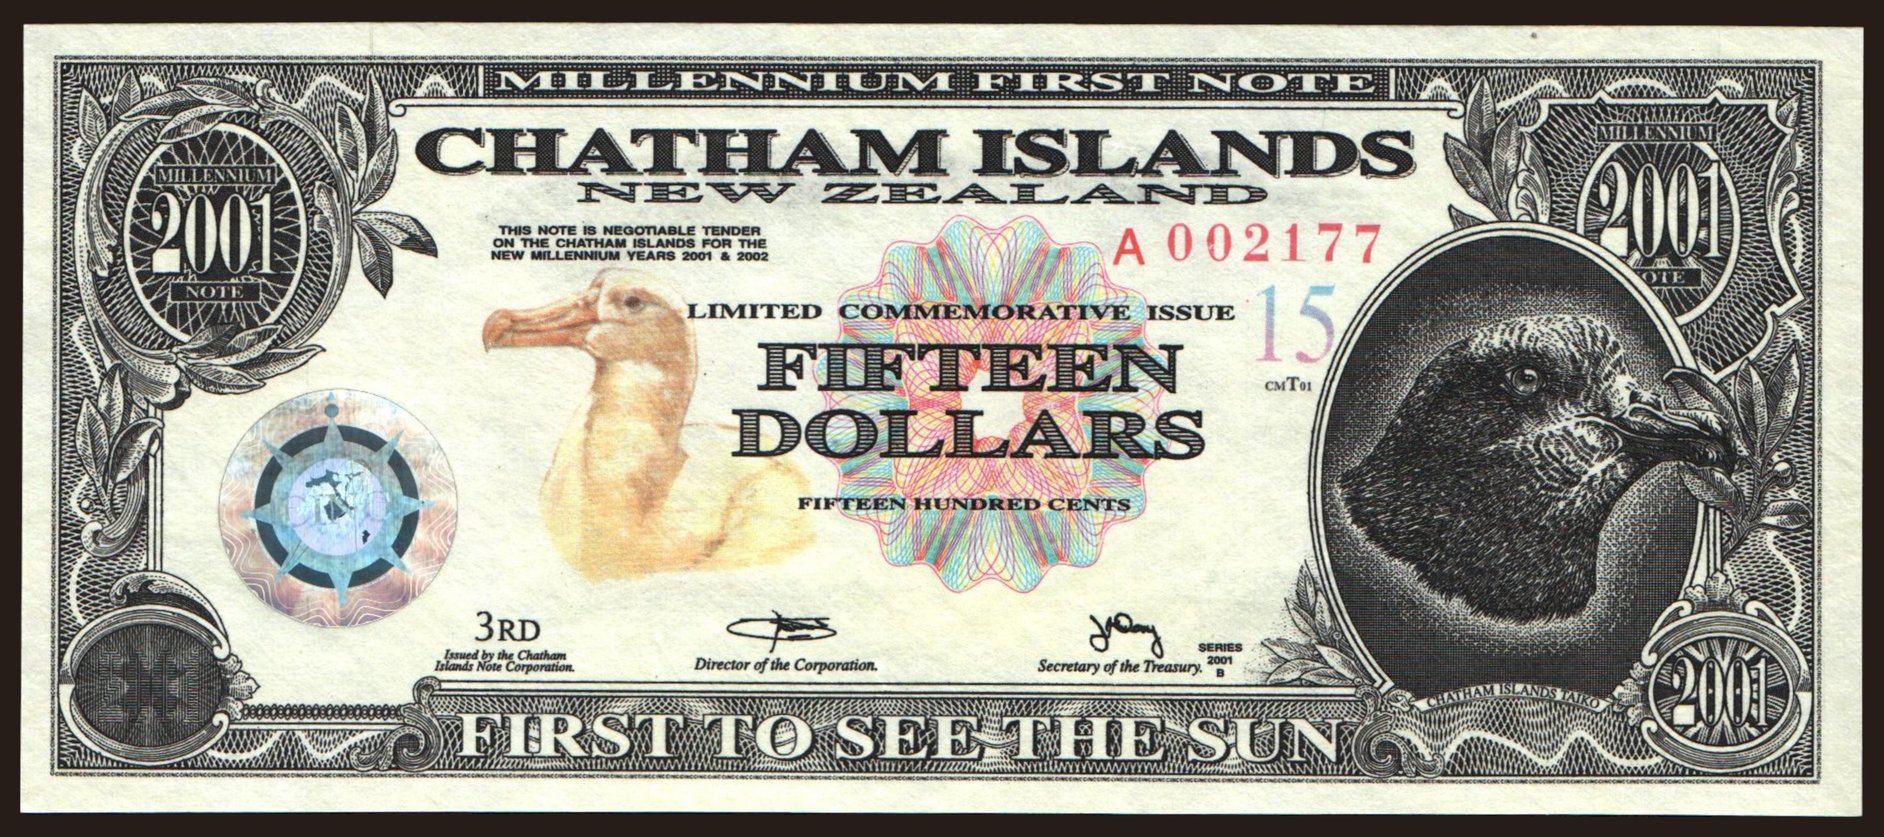 Chatham Islands, 15 dollars, 2001